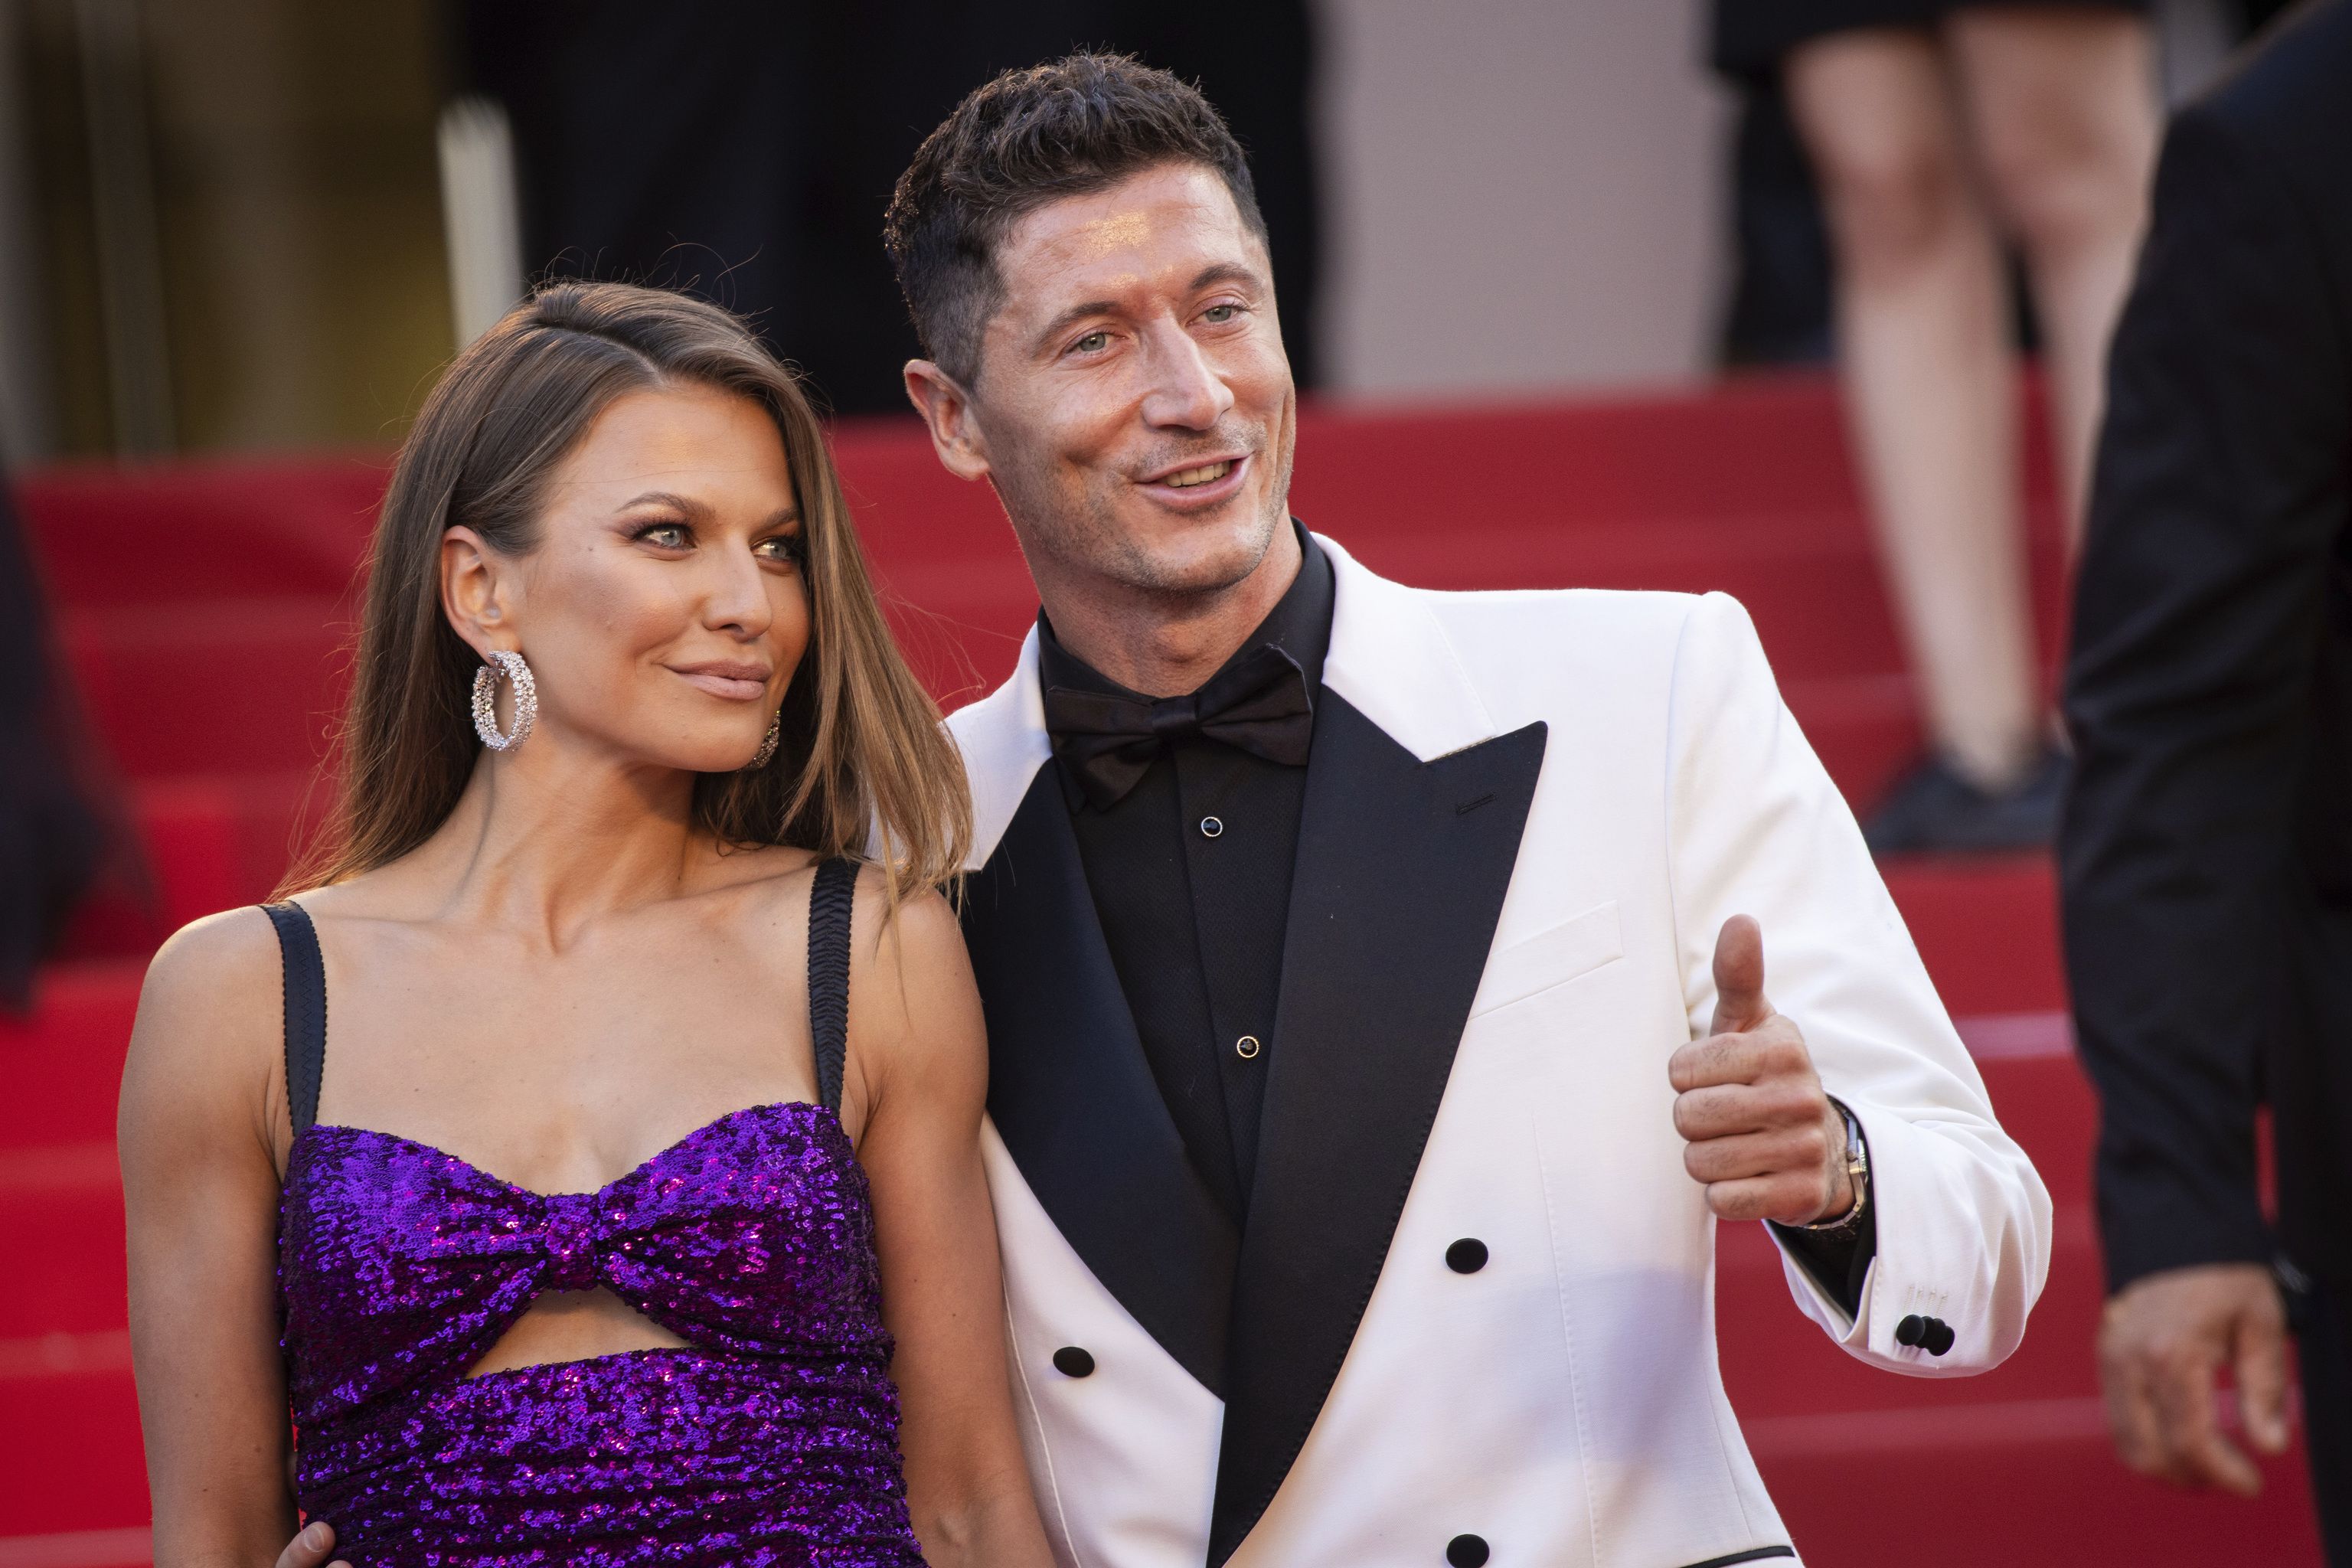 Anna Lewandowska y Robert Lewandowski en el Festival de Cannes 2022